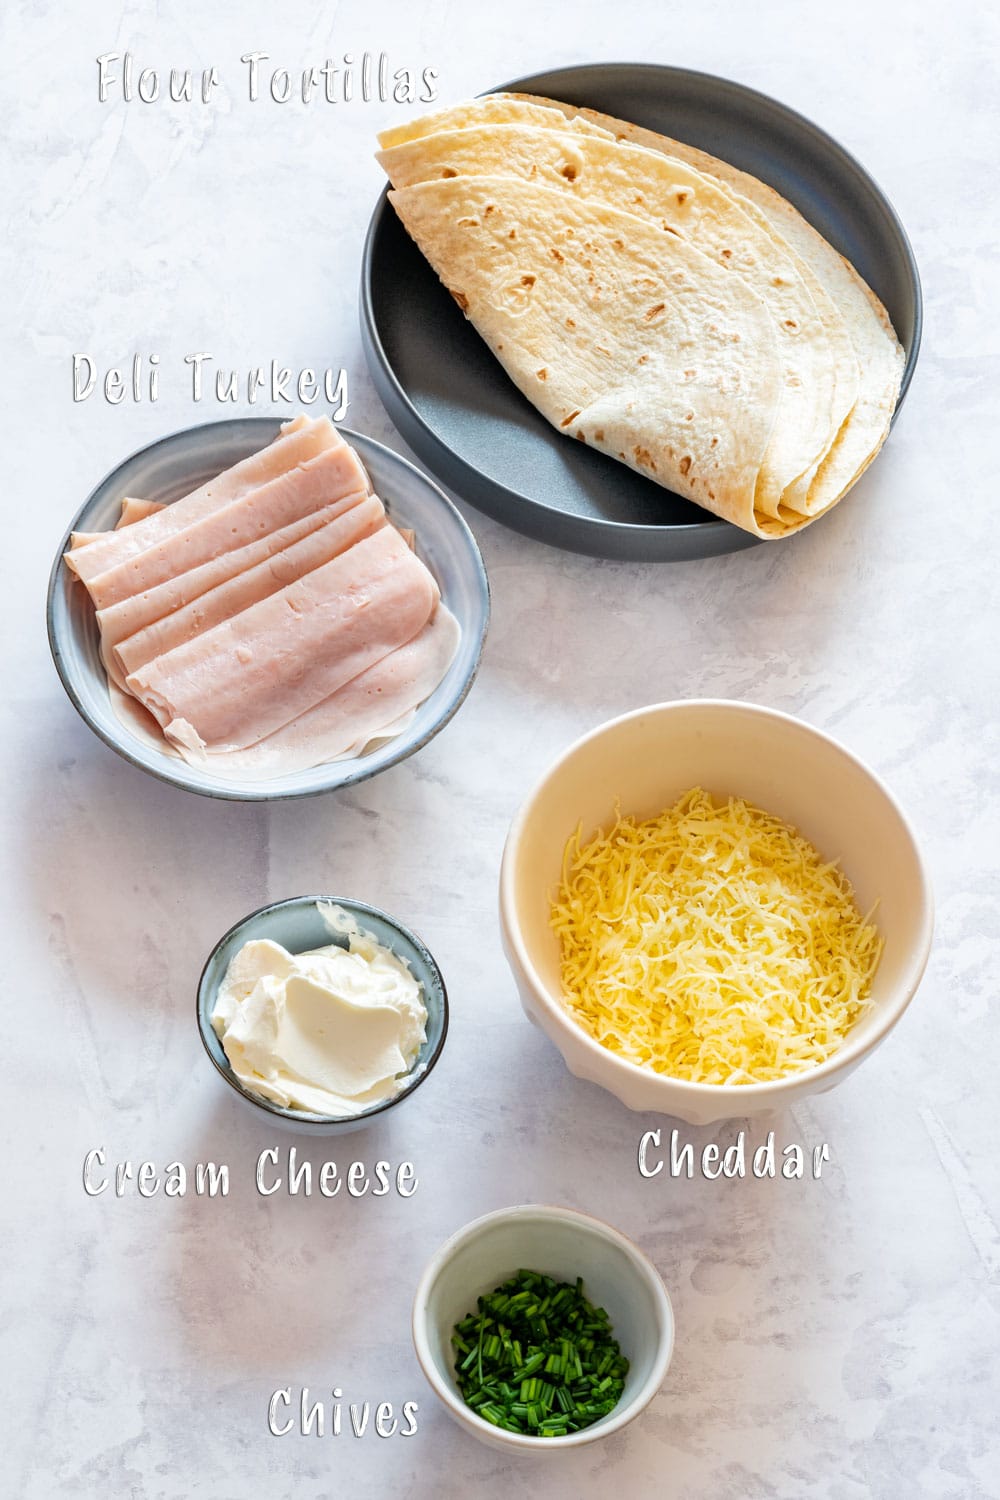 Ingredients of turkey pinwheels: flour tortillas, cream cheese, deli turkey, cheddar and chives.